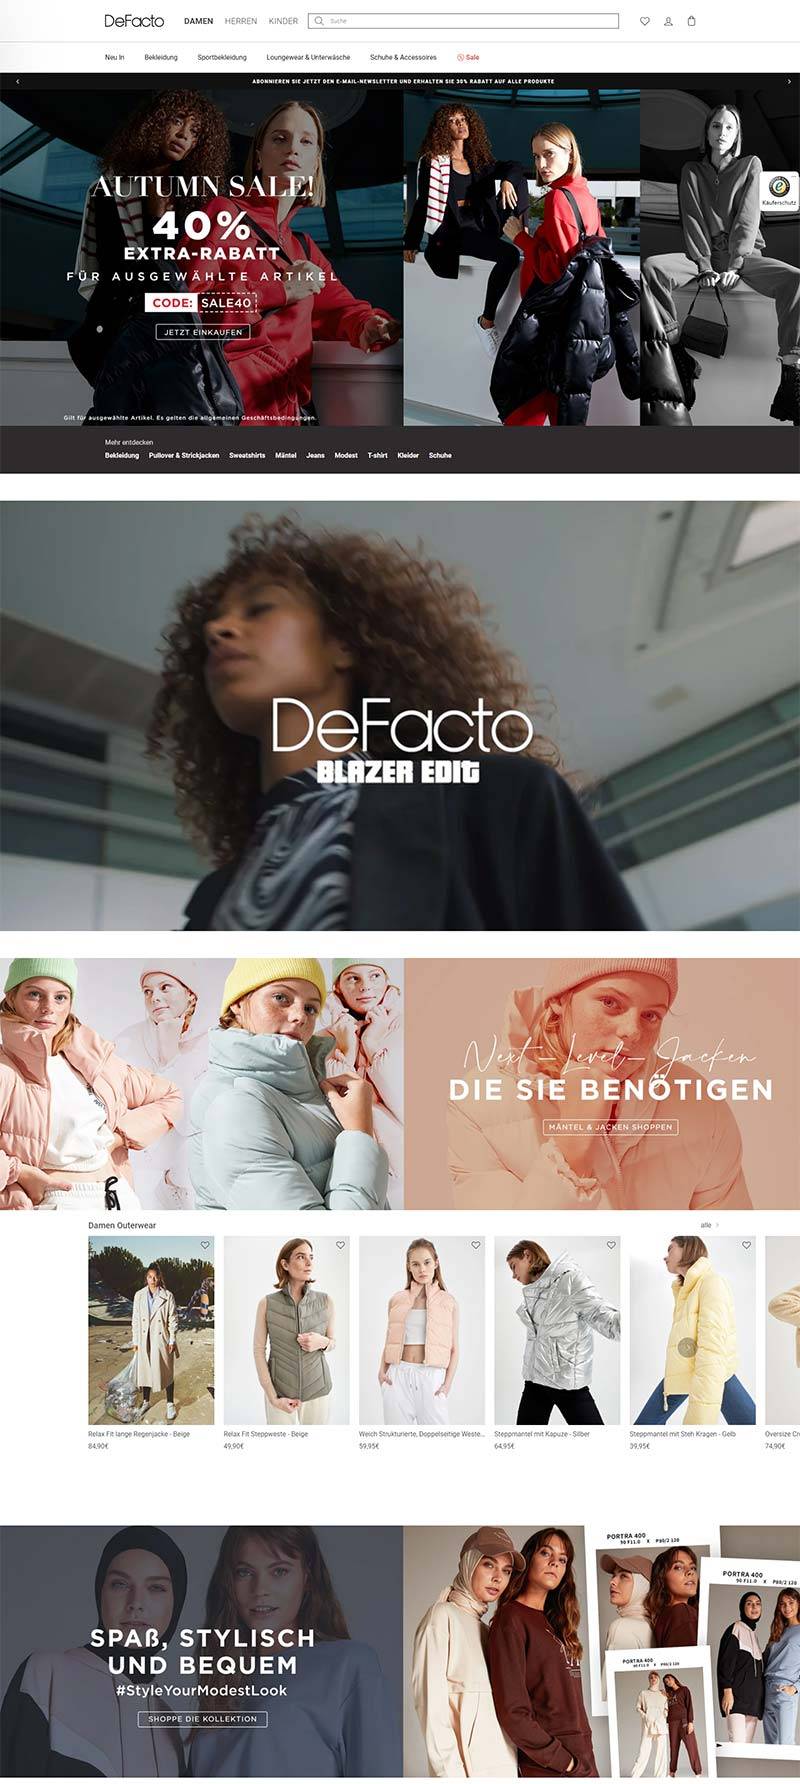 Defacto 德国时尚服饰品牌购物网站